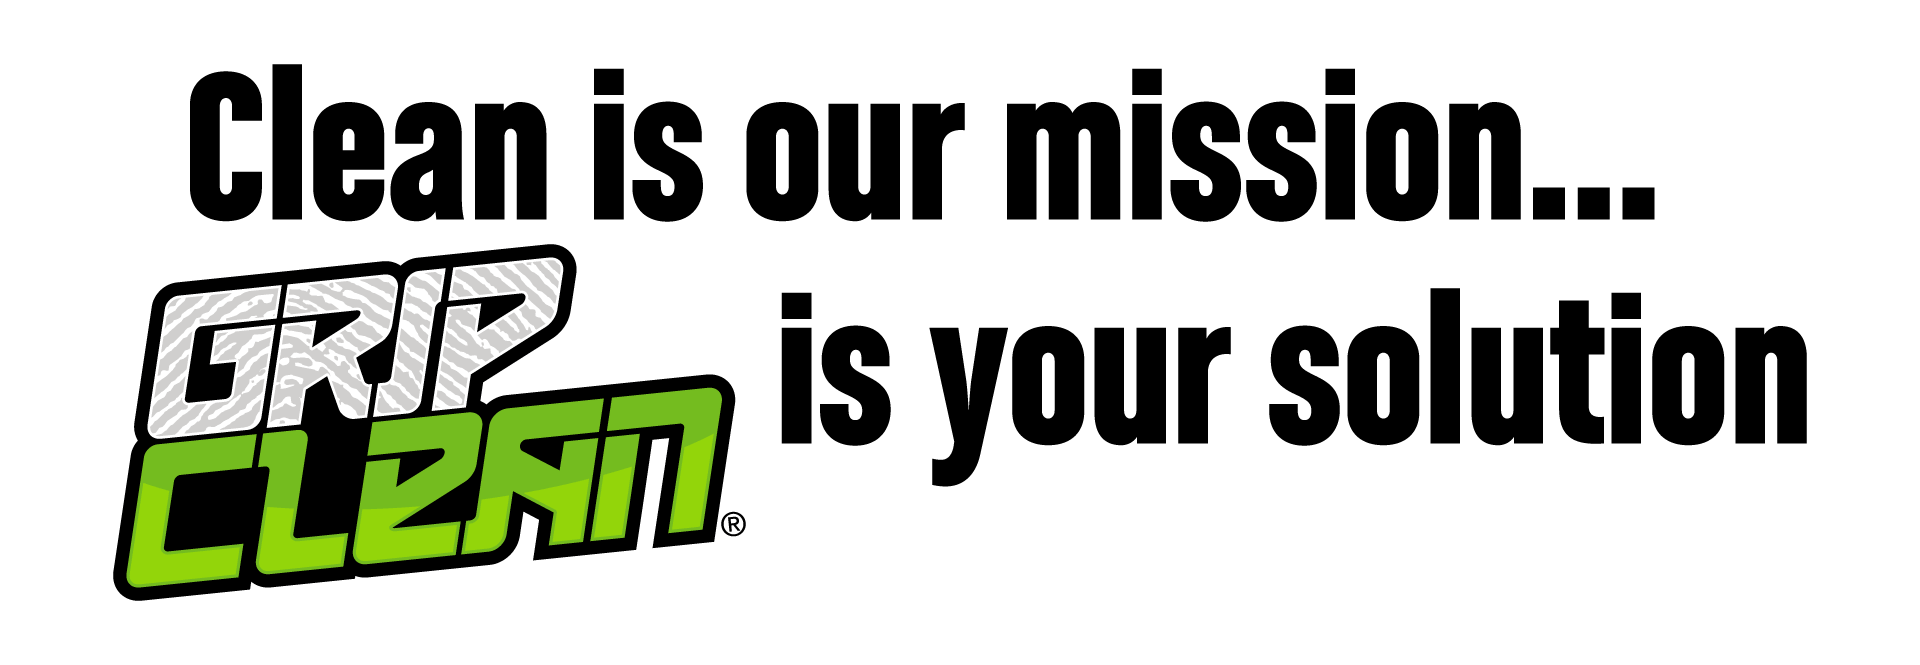 Grip Clean logo transparent PNG - StickPNG